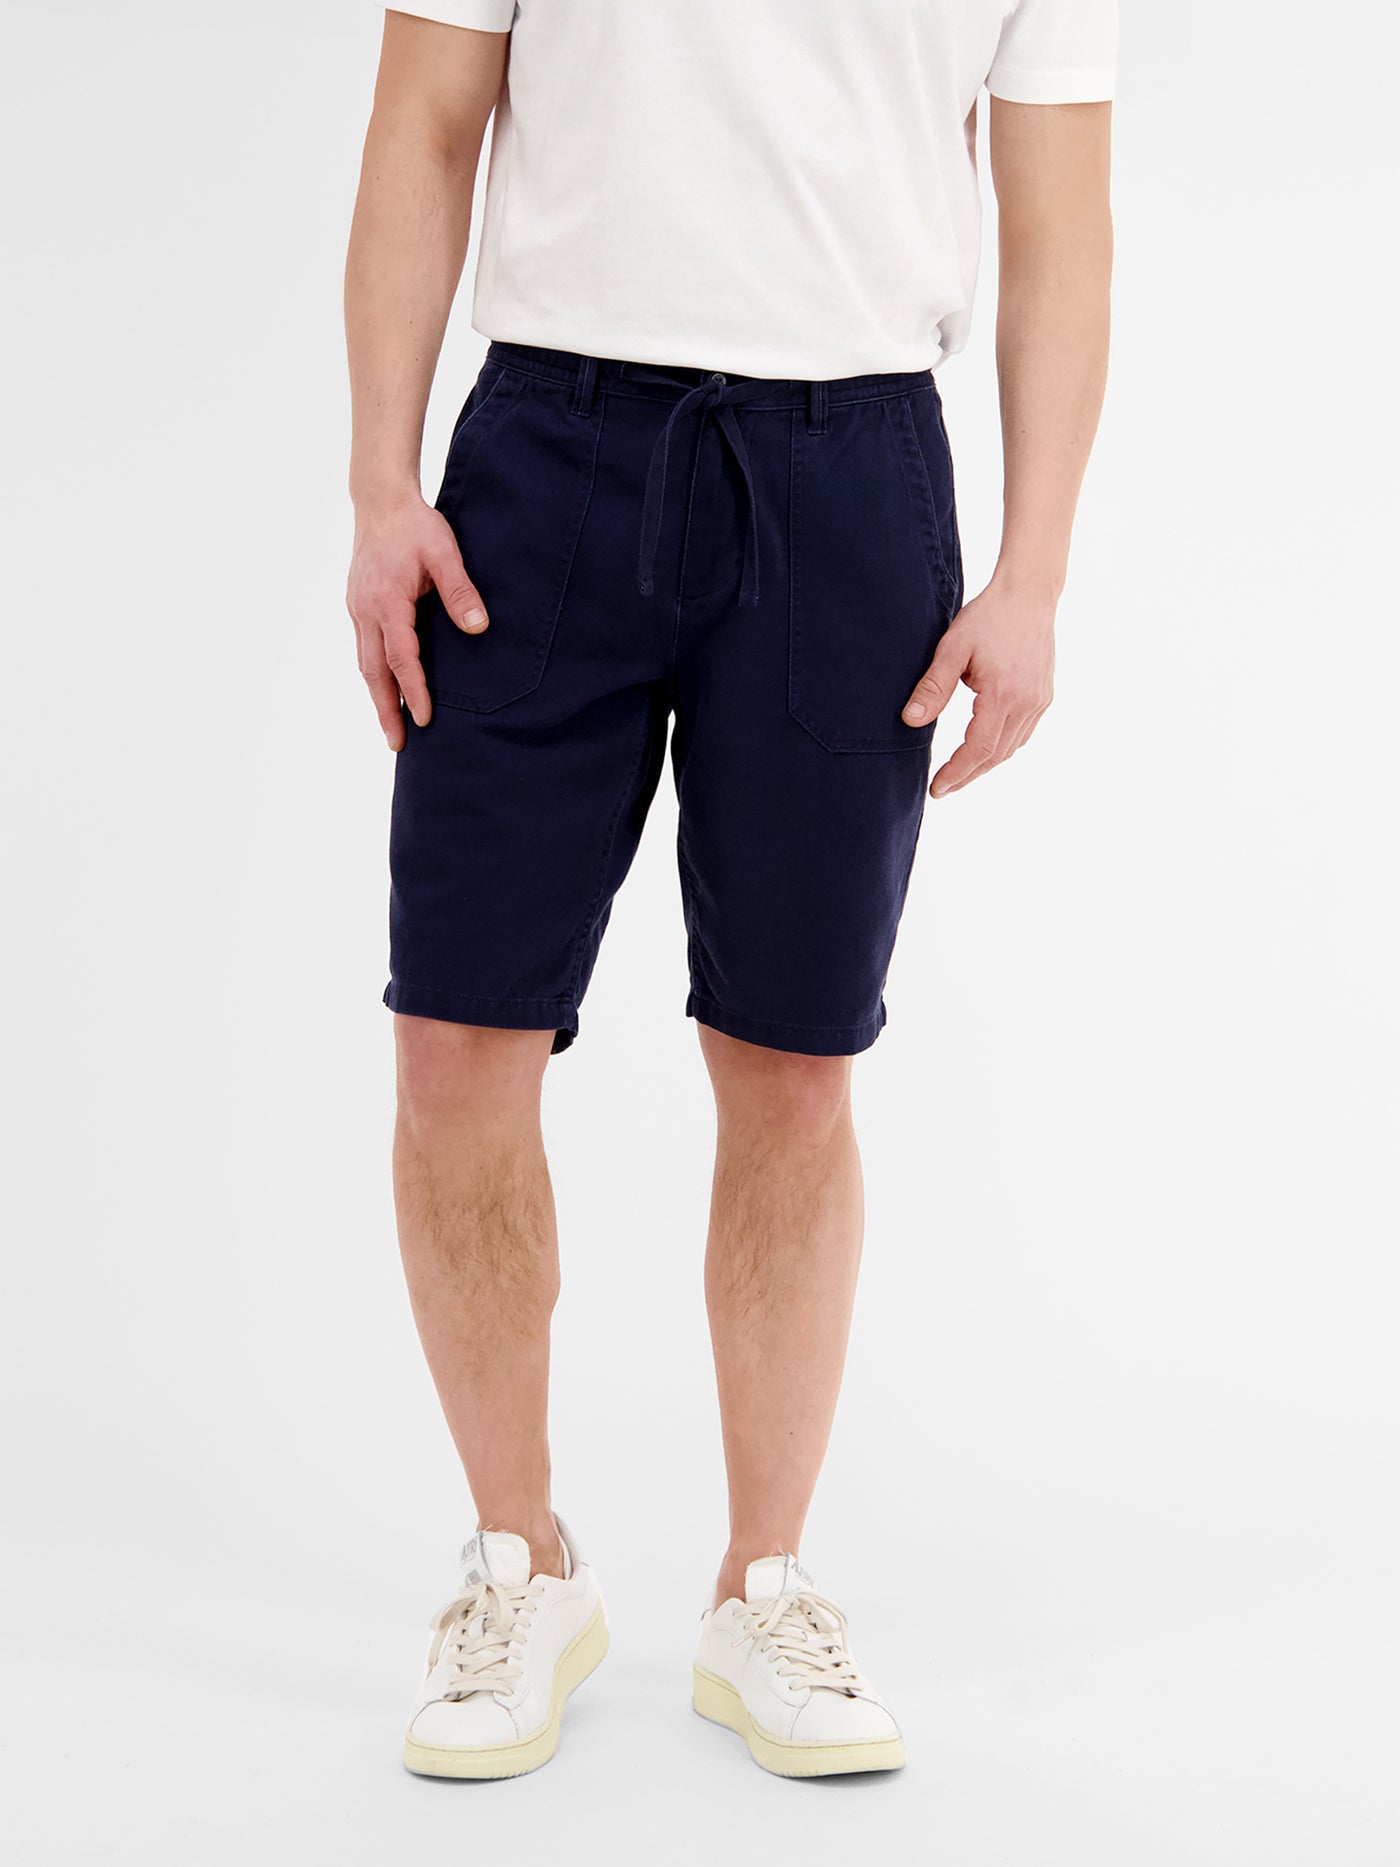 Summery shorts with drawstring